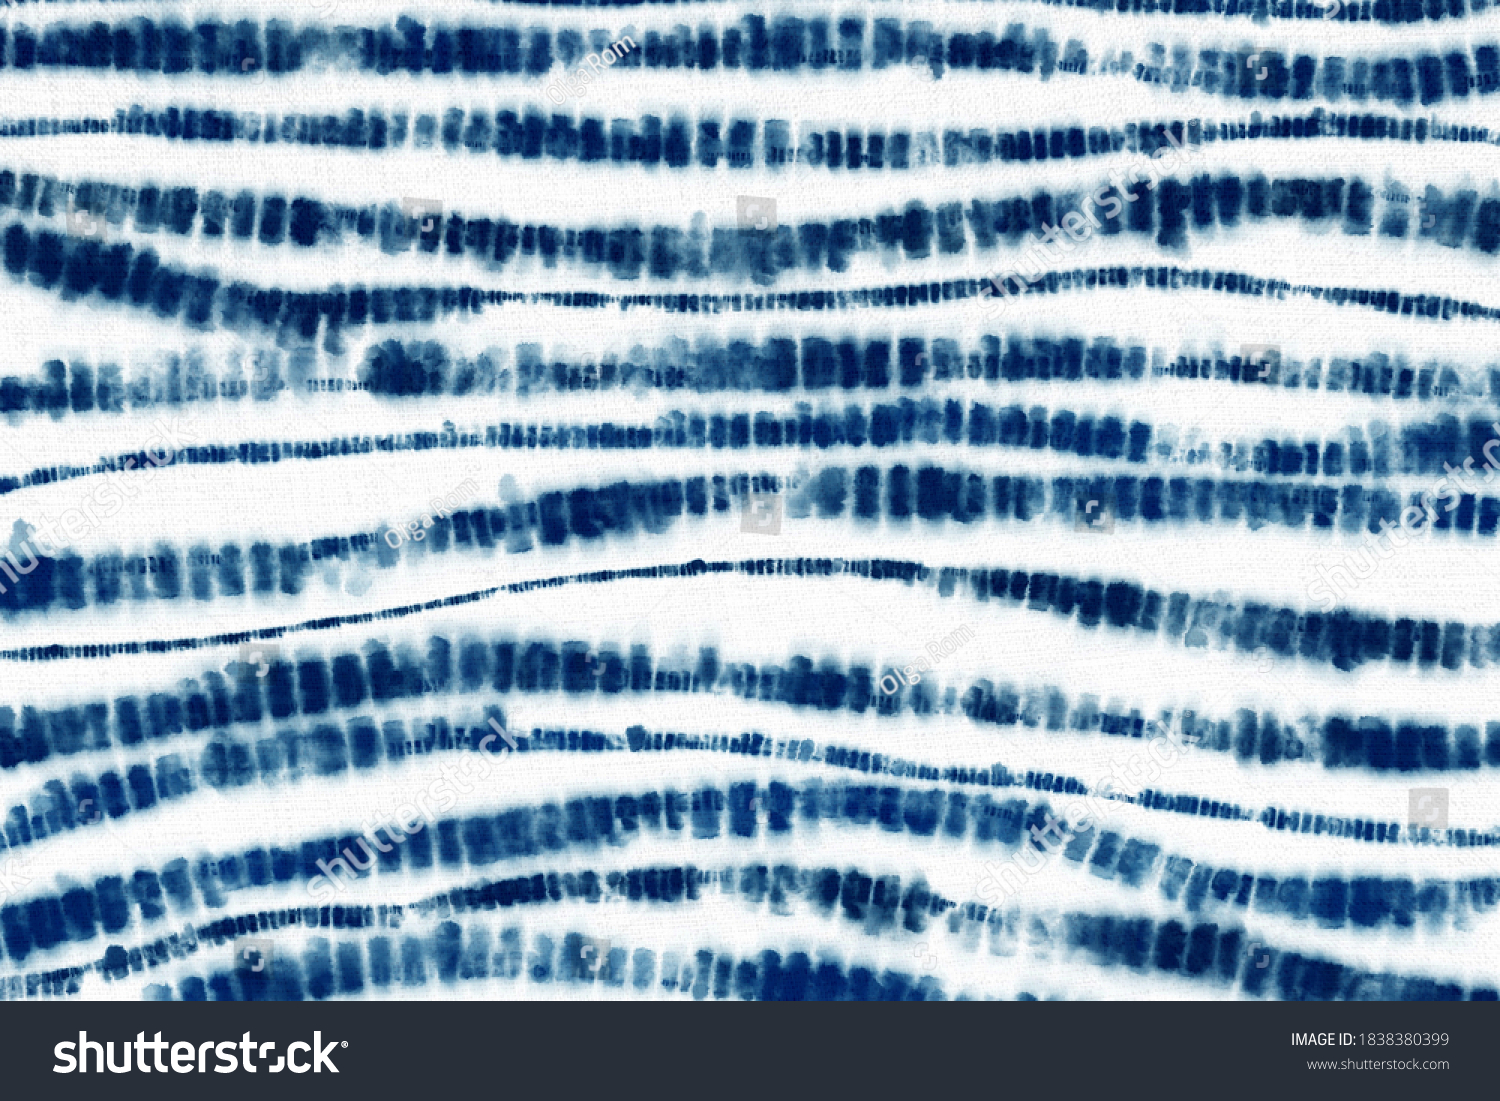 Indigo Blue Shibori Tie dye fabric texture pattern. White and Blue colors #1838380399